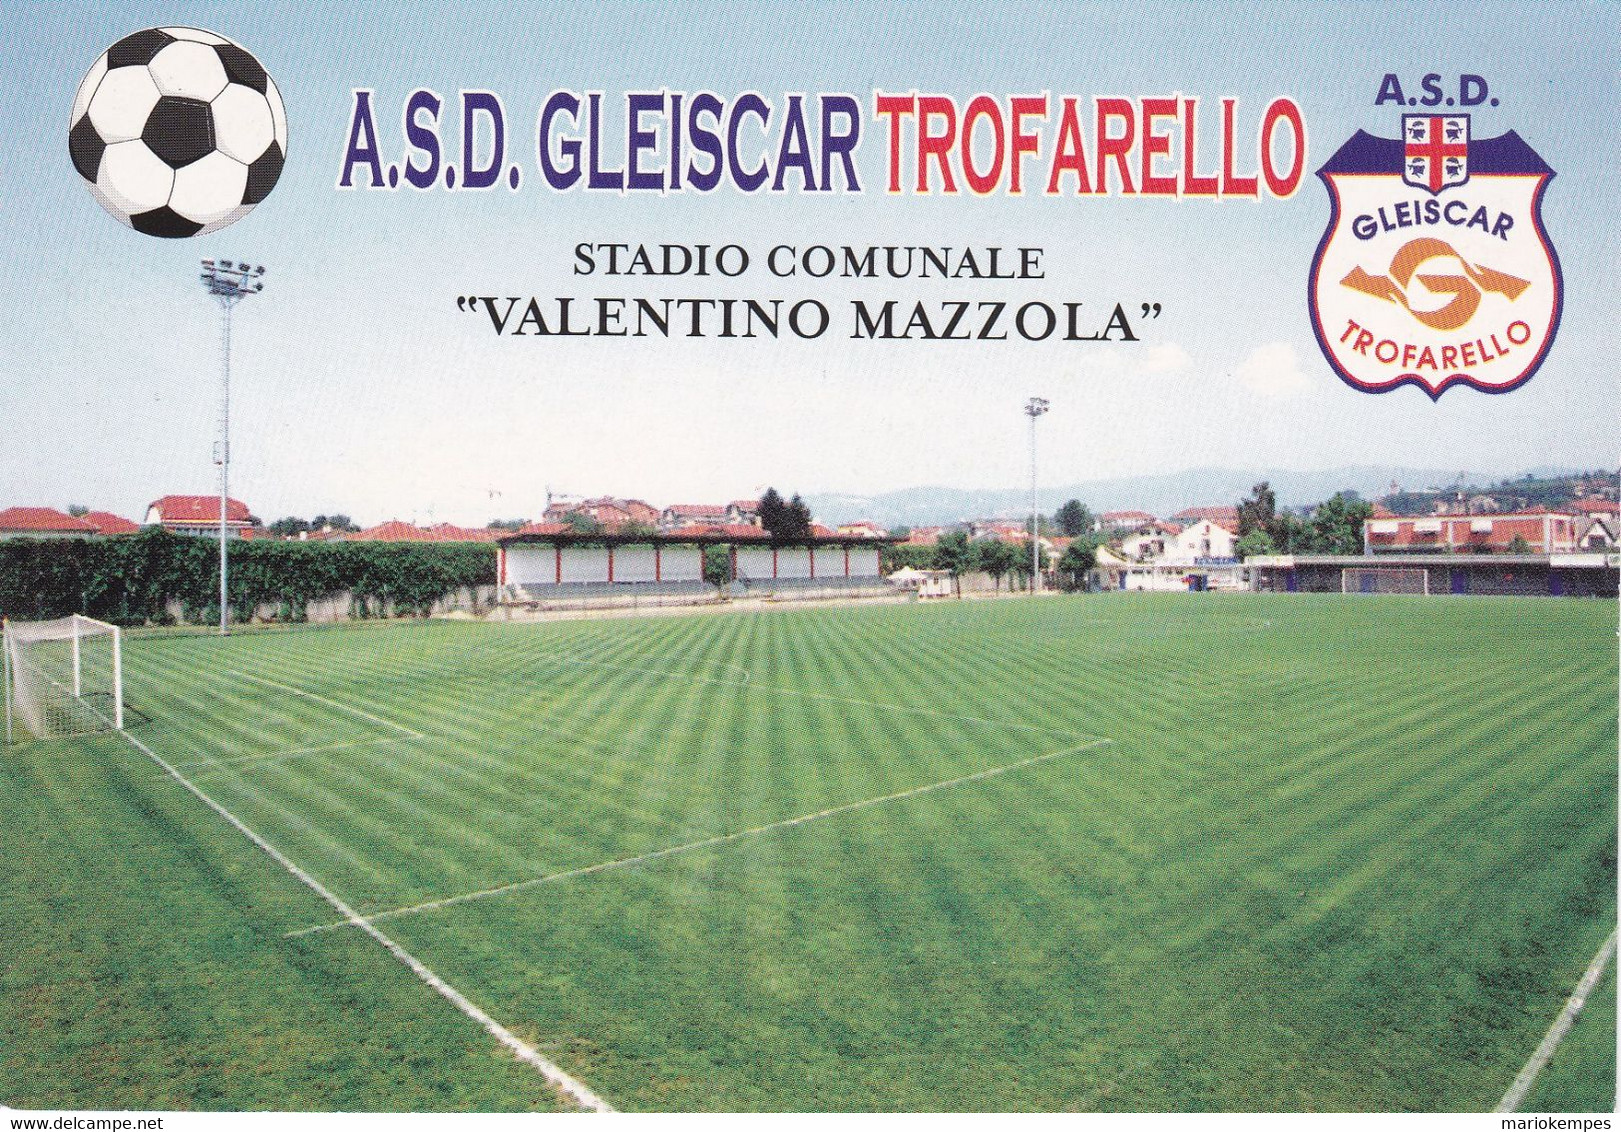 TROFARELLO (TO)_A.S.GLEISCAR TROFARELLO_STADIO COMUNALE "VALENTINO MAZZOLA"_Stadium_Stade_Estadio_Stadion - Stades & Structures Sportives